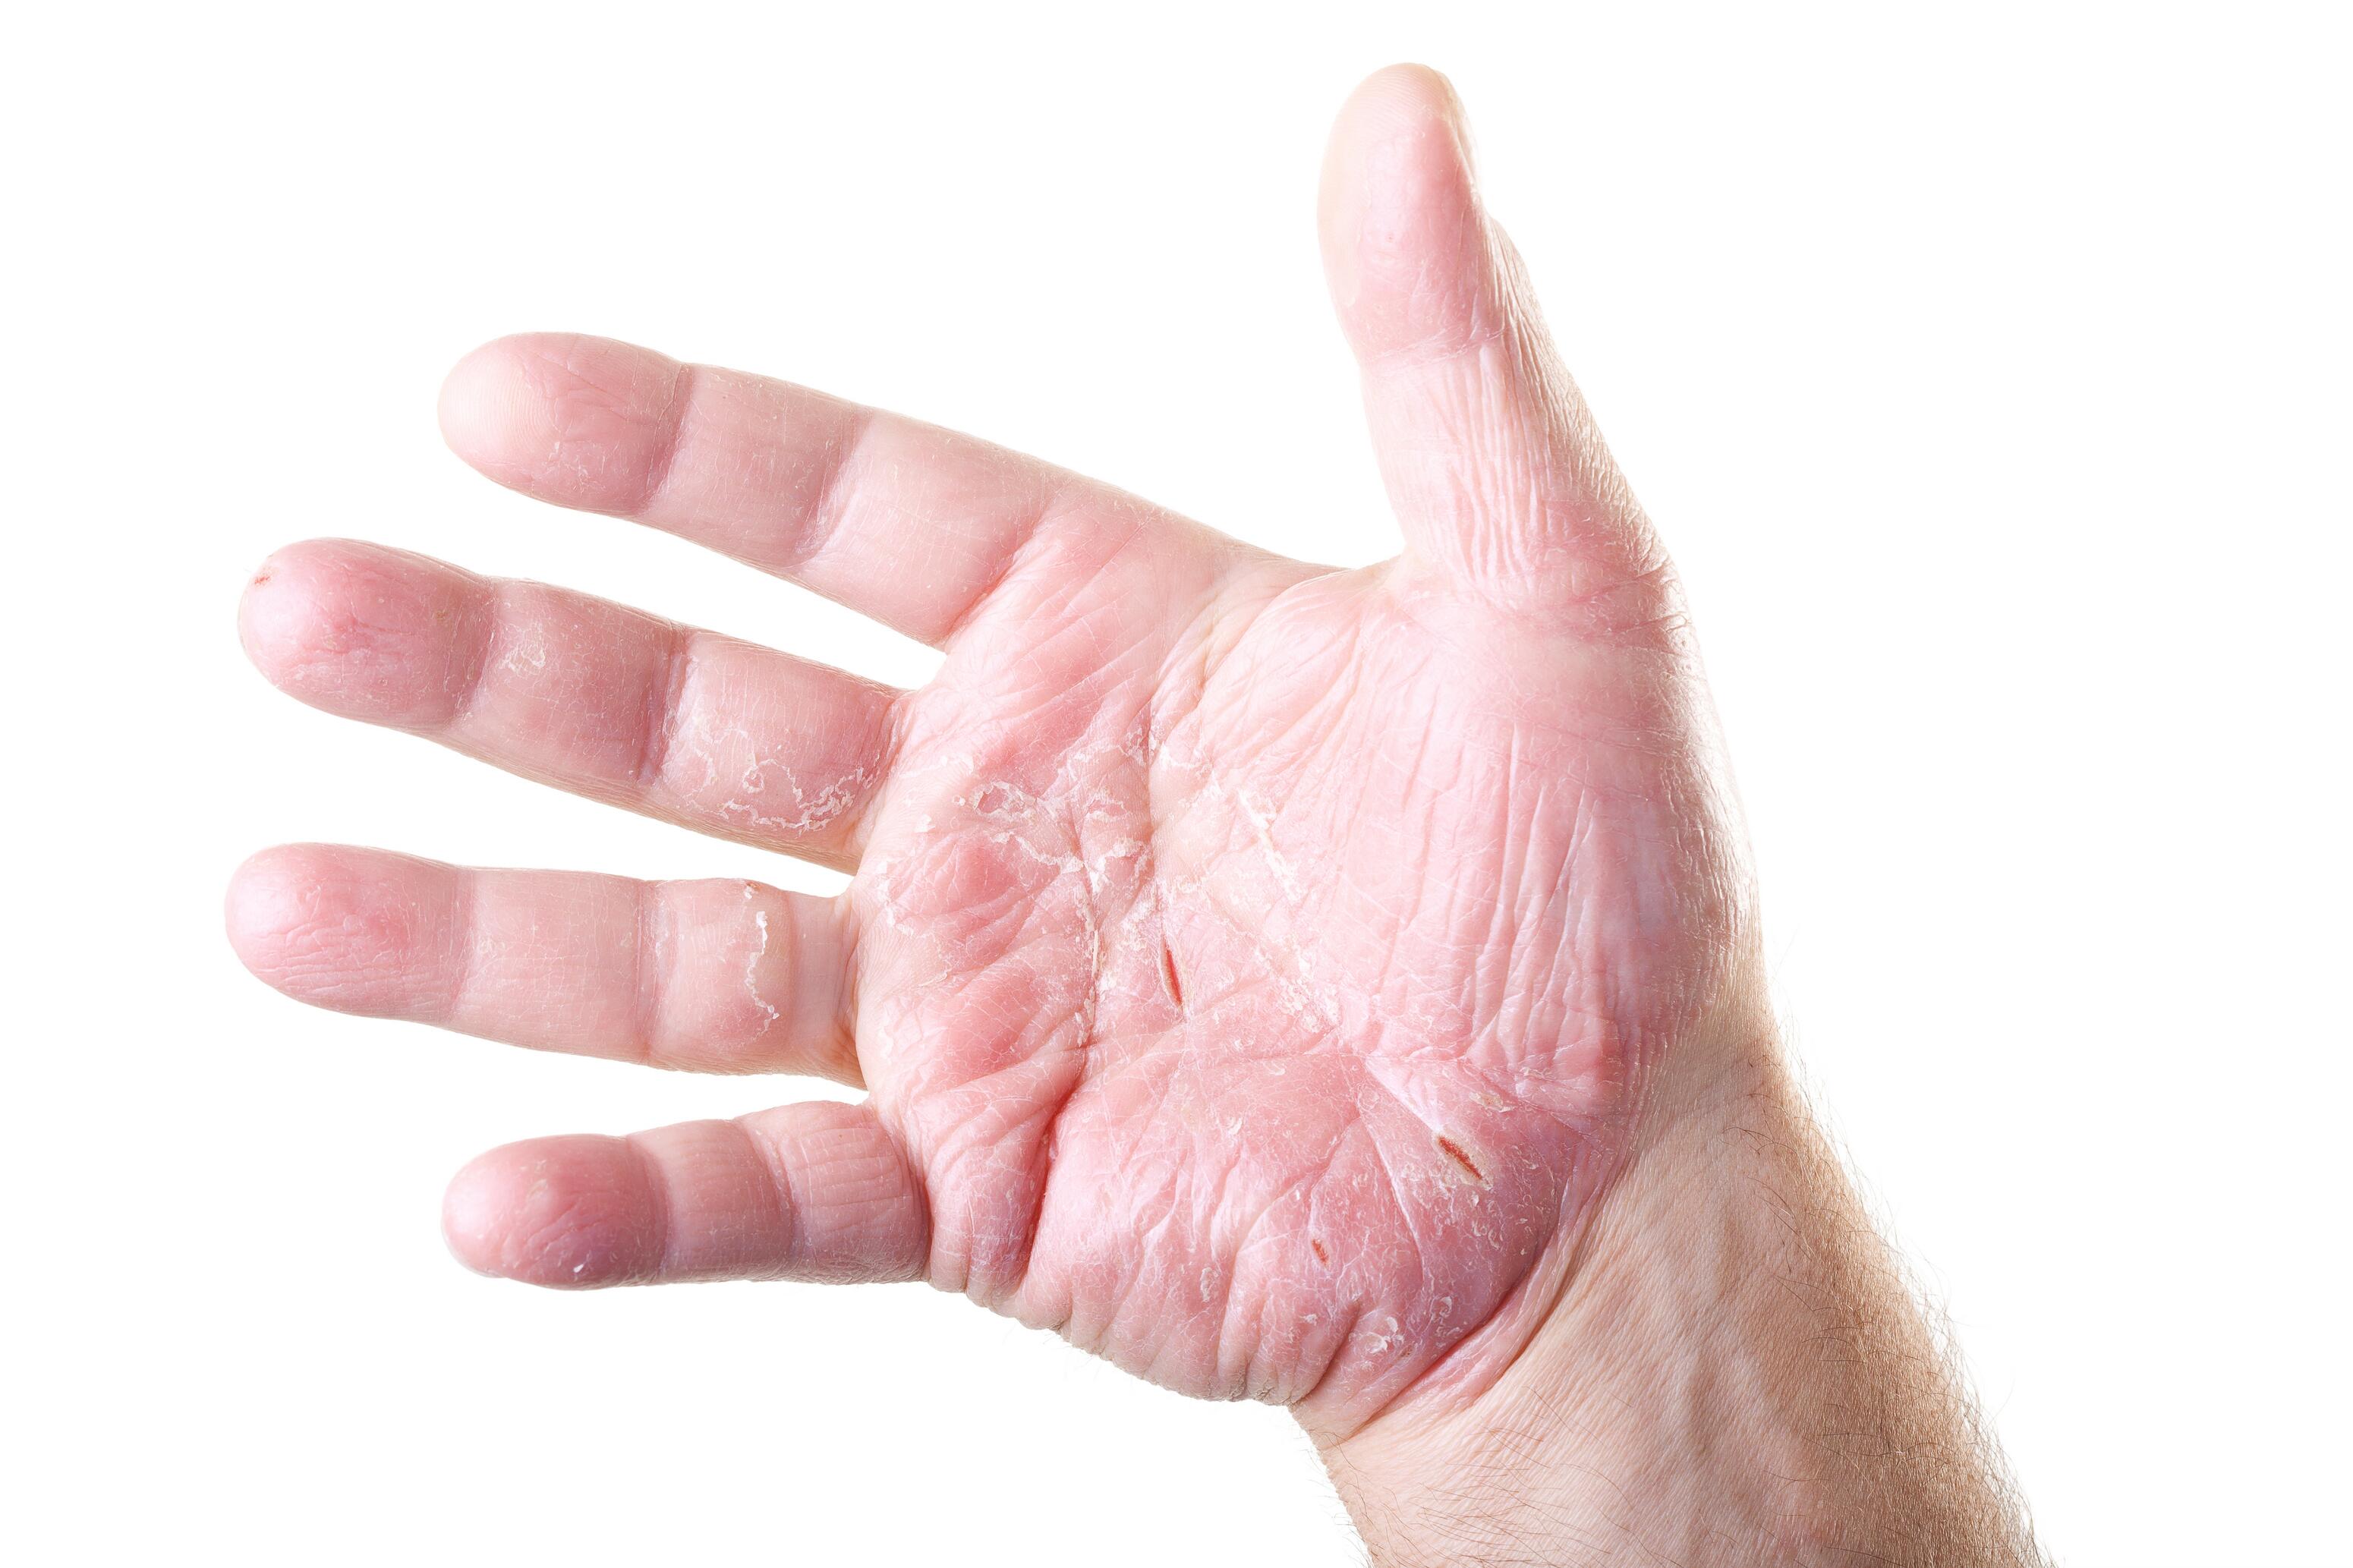 Hand palm with hyperkeratotic dermatitis